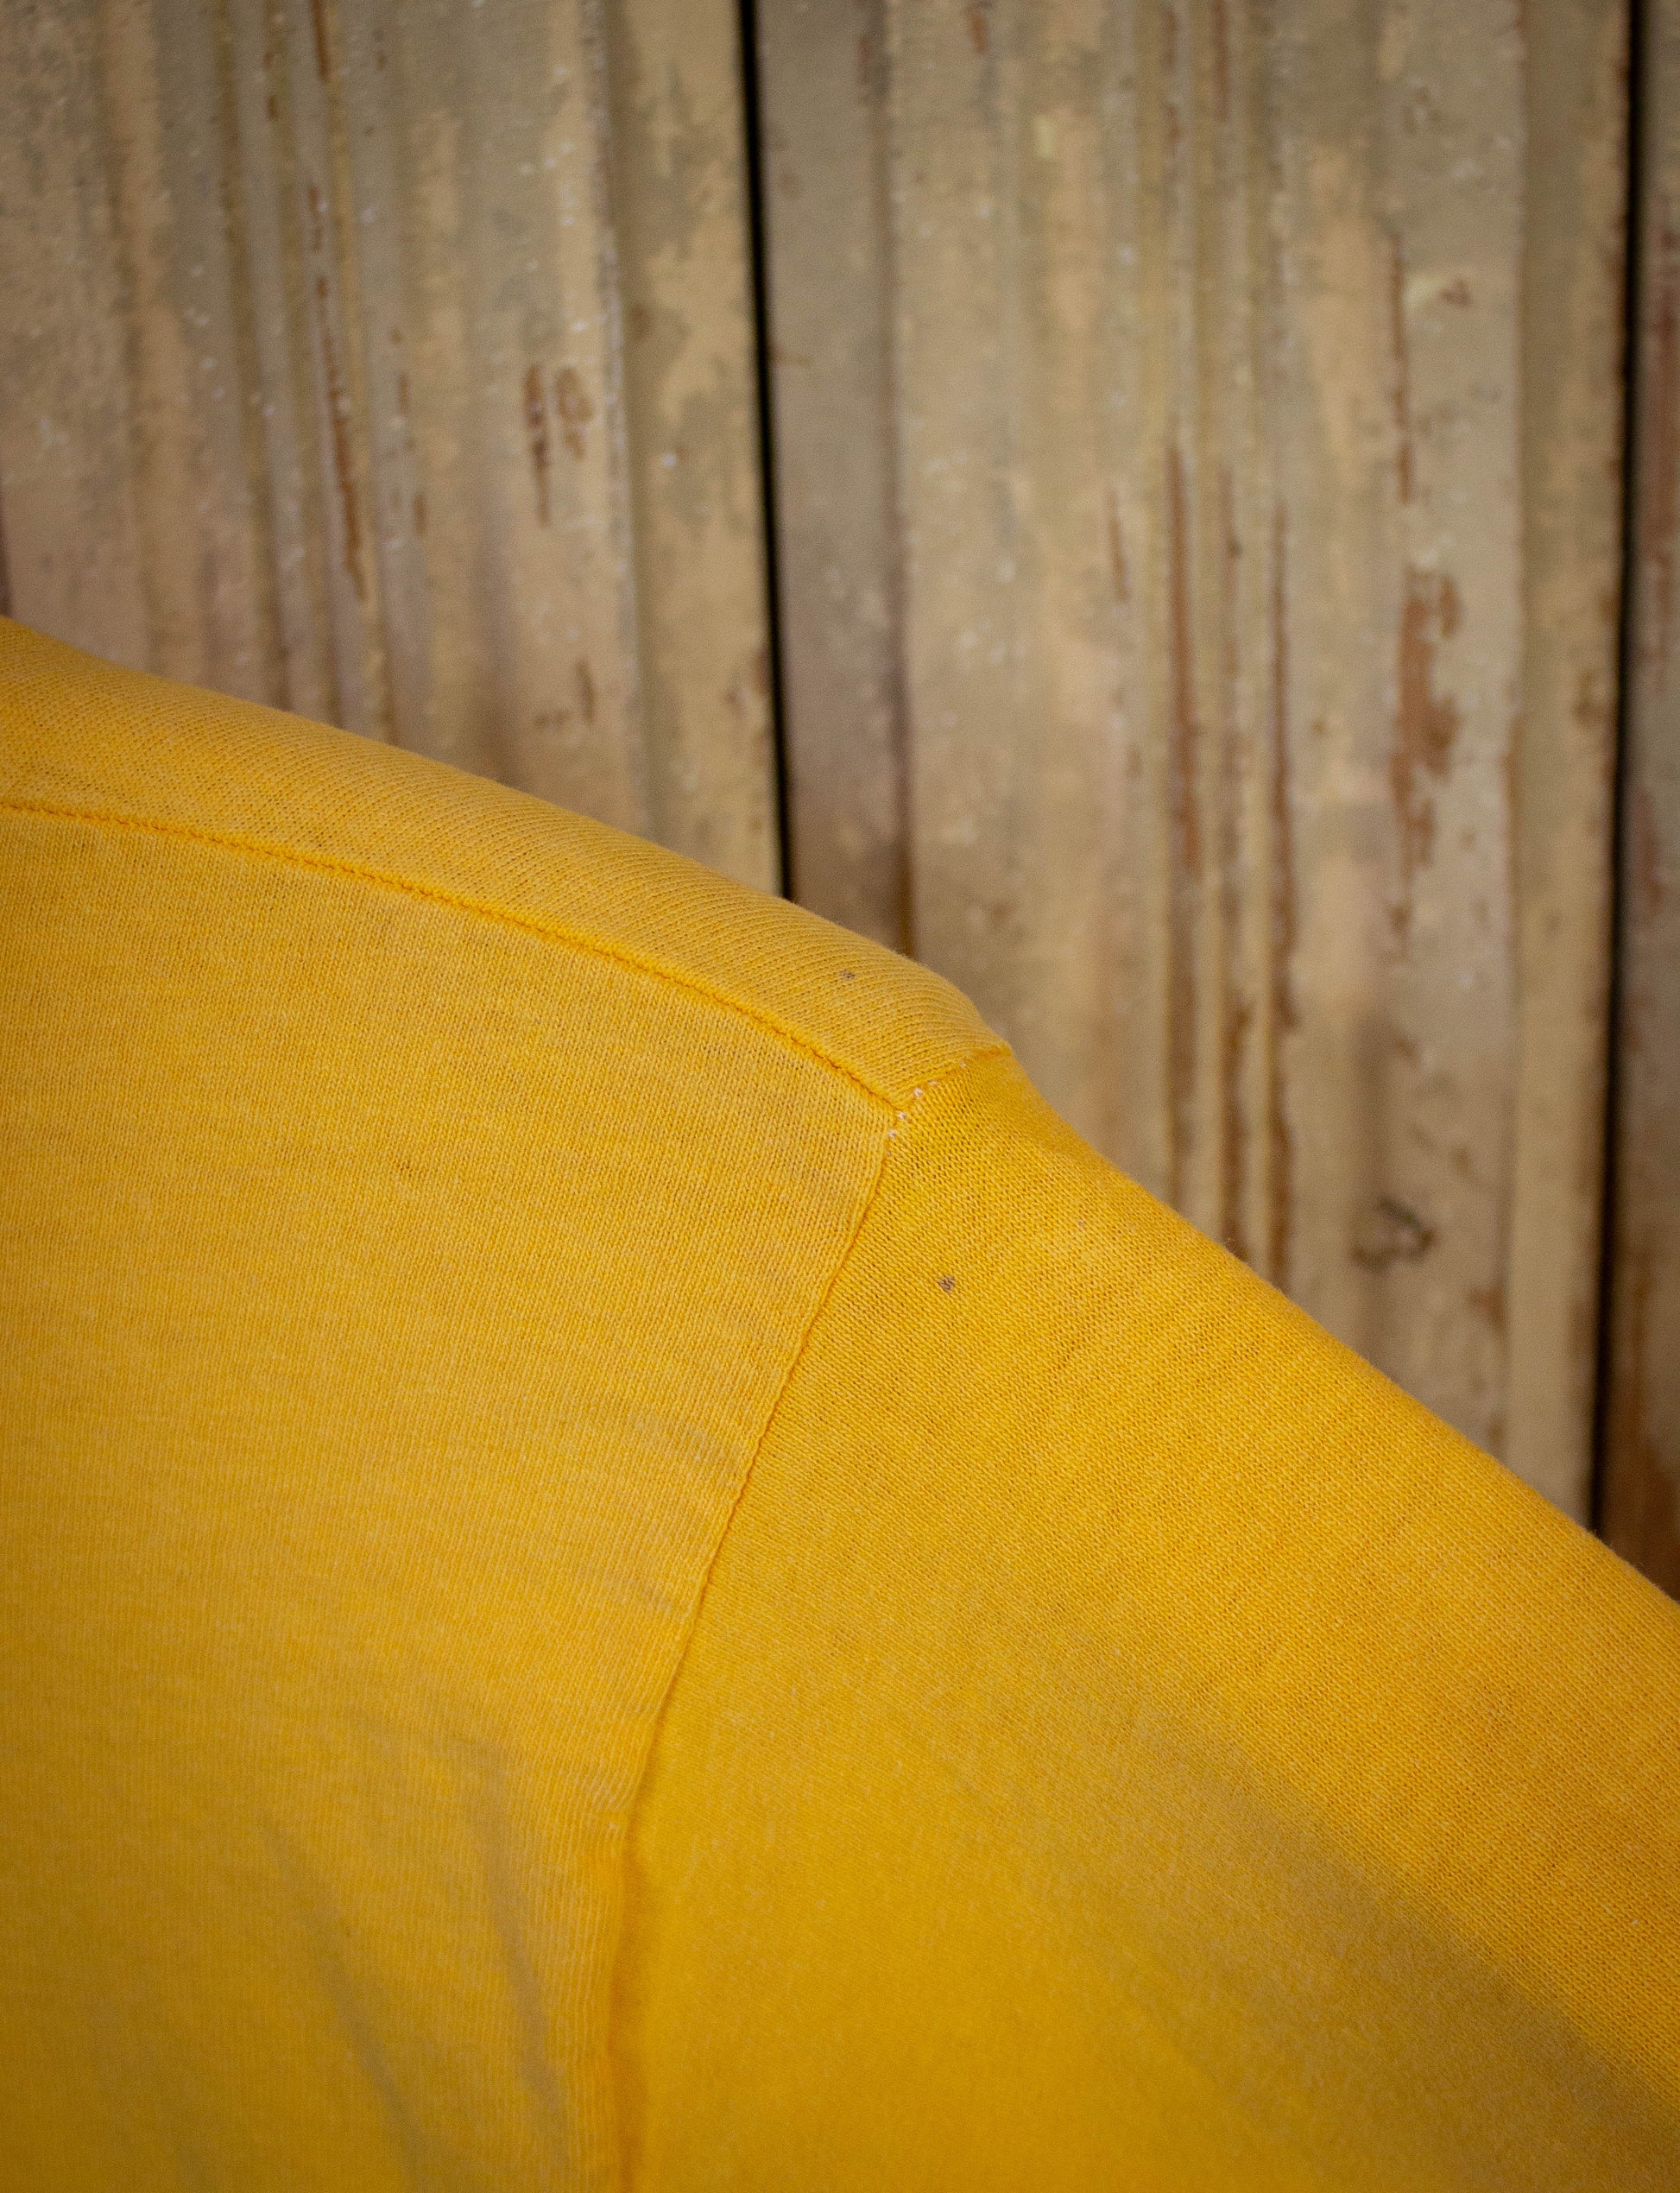 Vintage Frampton Comes Alive Concert T Shirt 70s Yellow Medium - Large